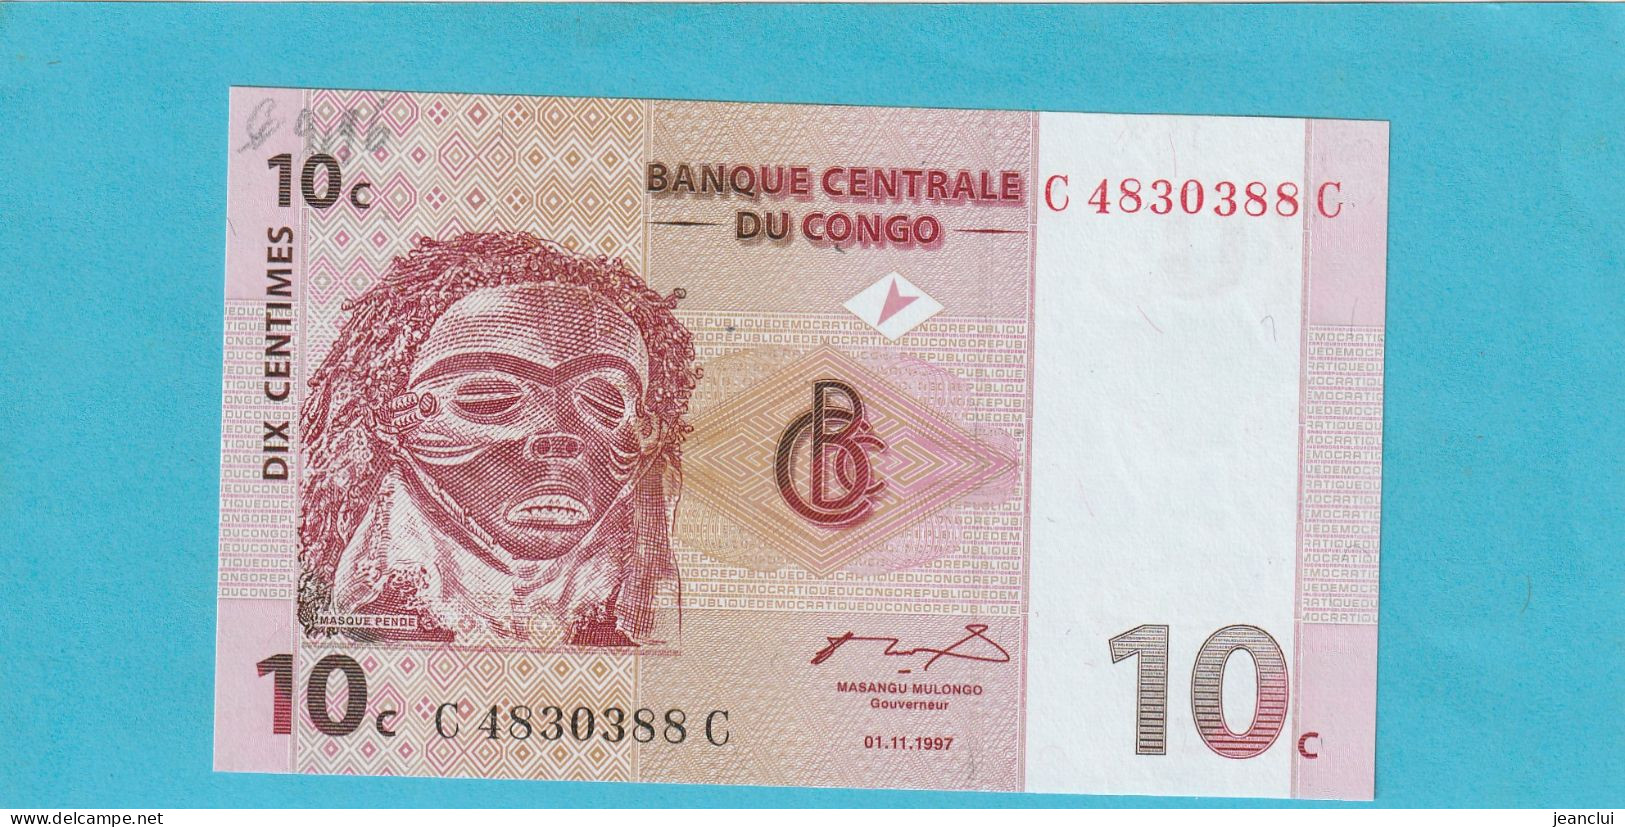 BANQUE CENTRALE DU CONGO  .  10 CENTIMES  .  01-11-1997  .  N°  C 4830388 C   .  BILLET EN TRES BEL ETAT  .  2 SCANNES - Demokratische Republik Kongo & Zaire